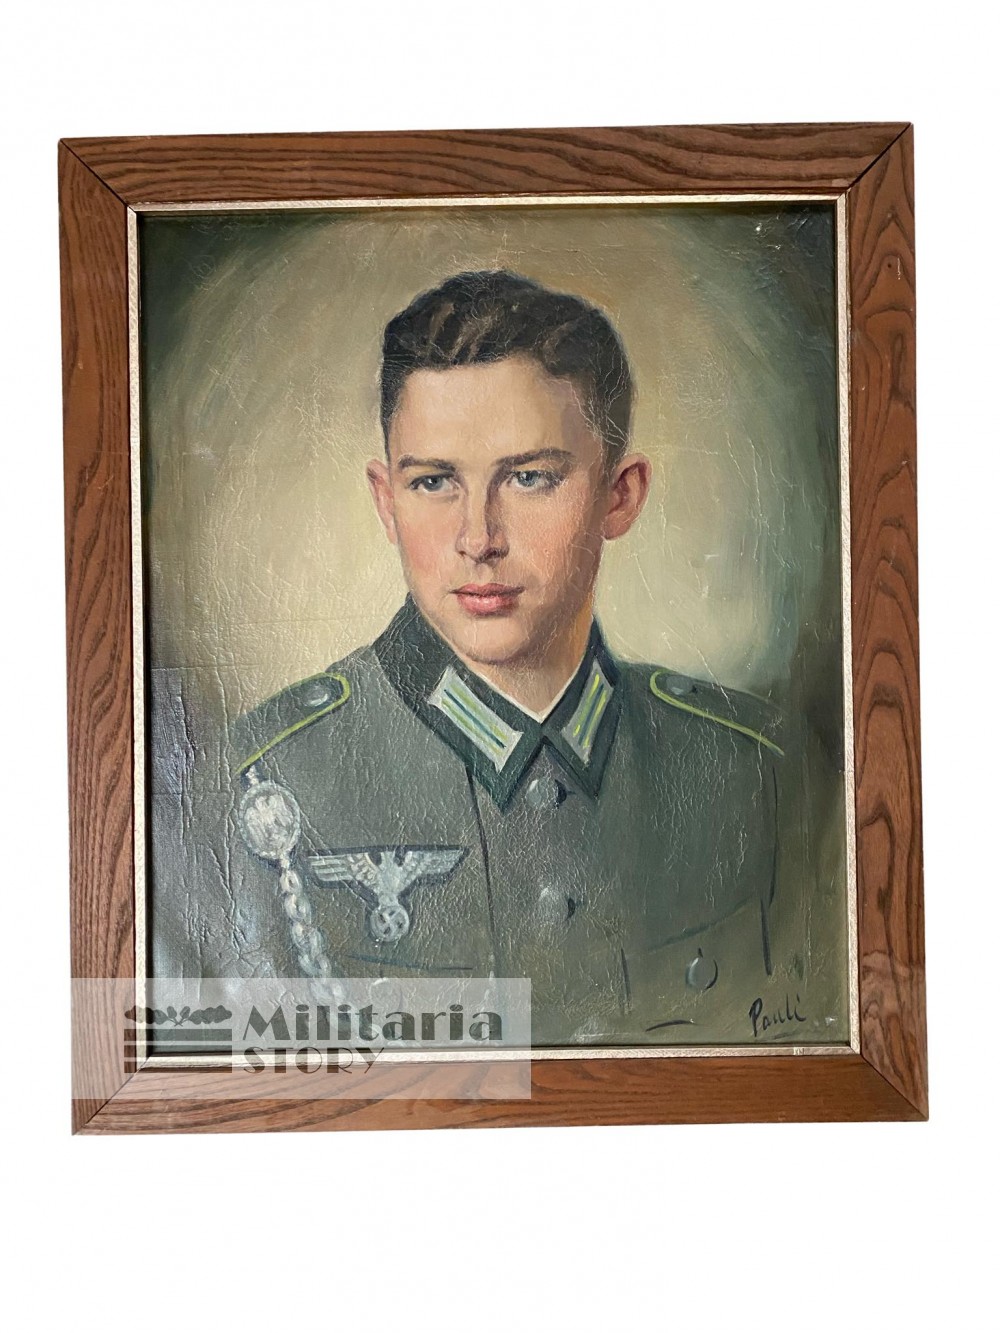 Oil portrait of Heer Panzergrenadier soldier